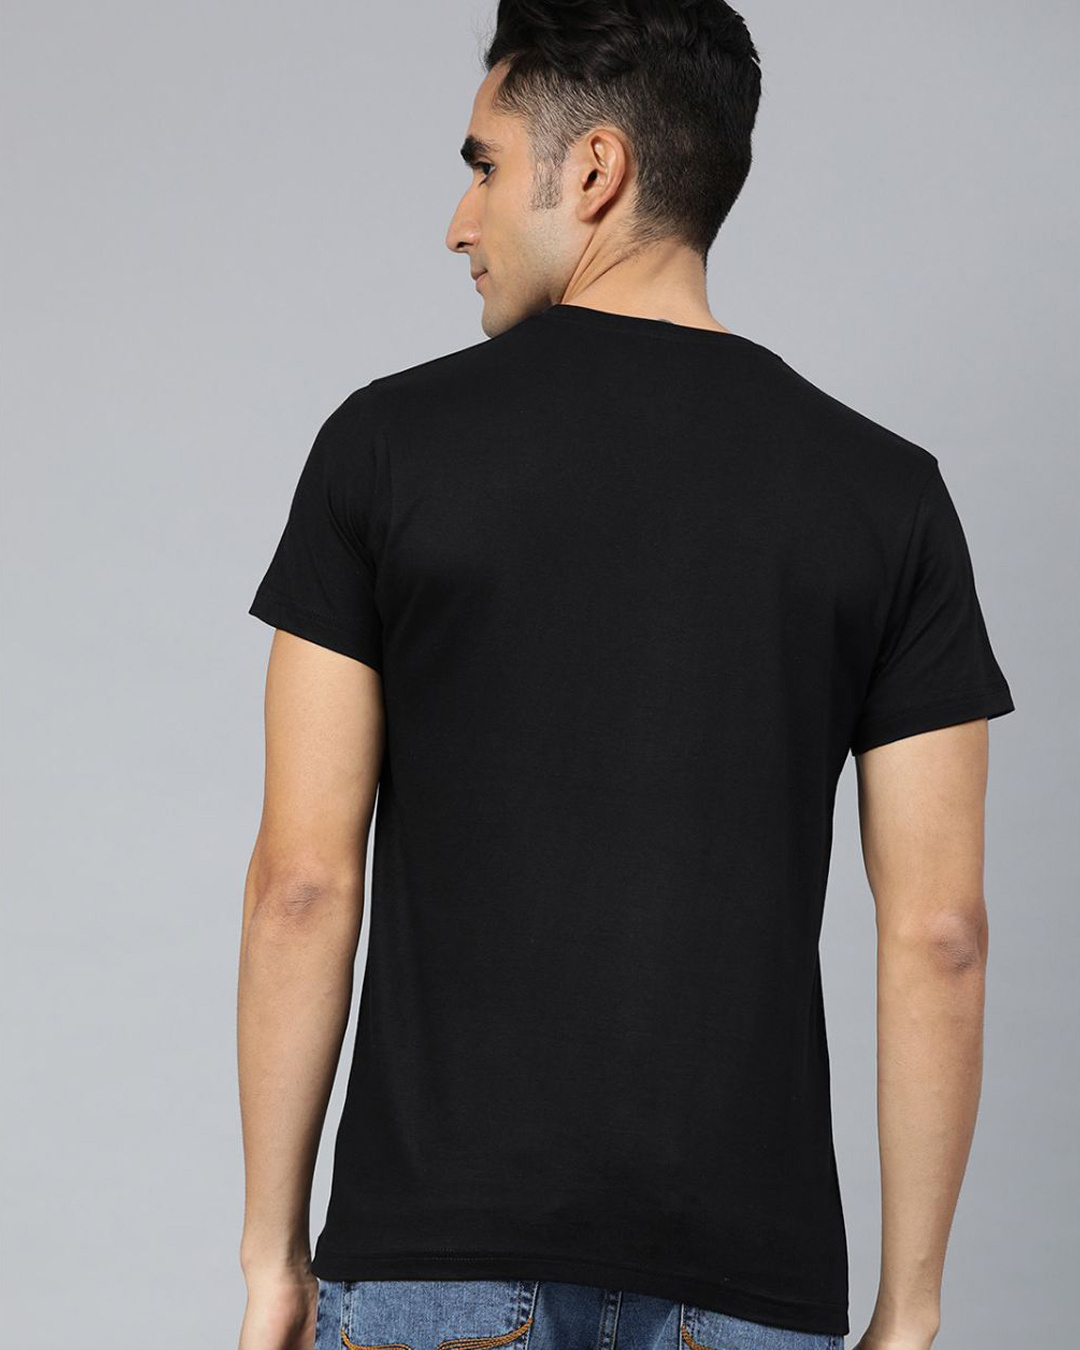 Shop Black Graphic T Shirt-Back